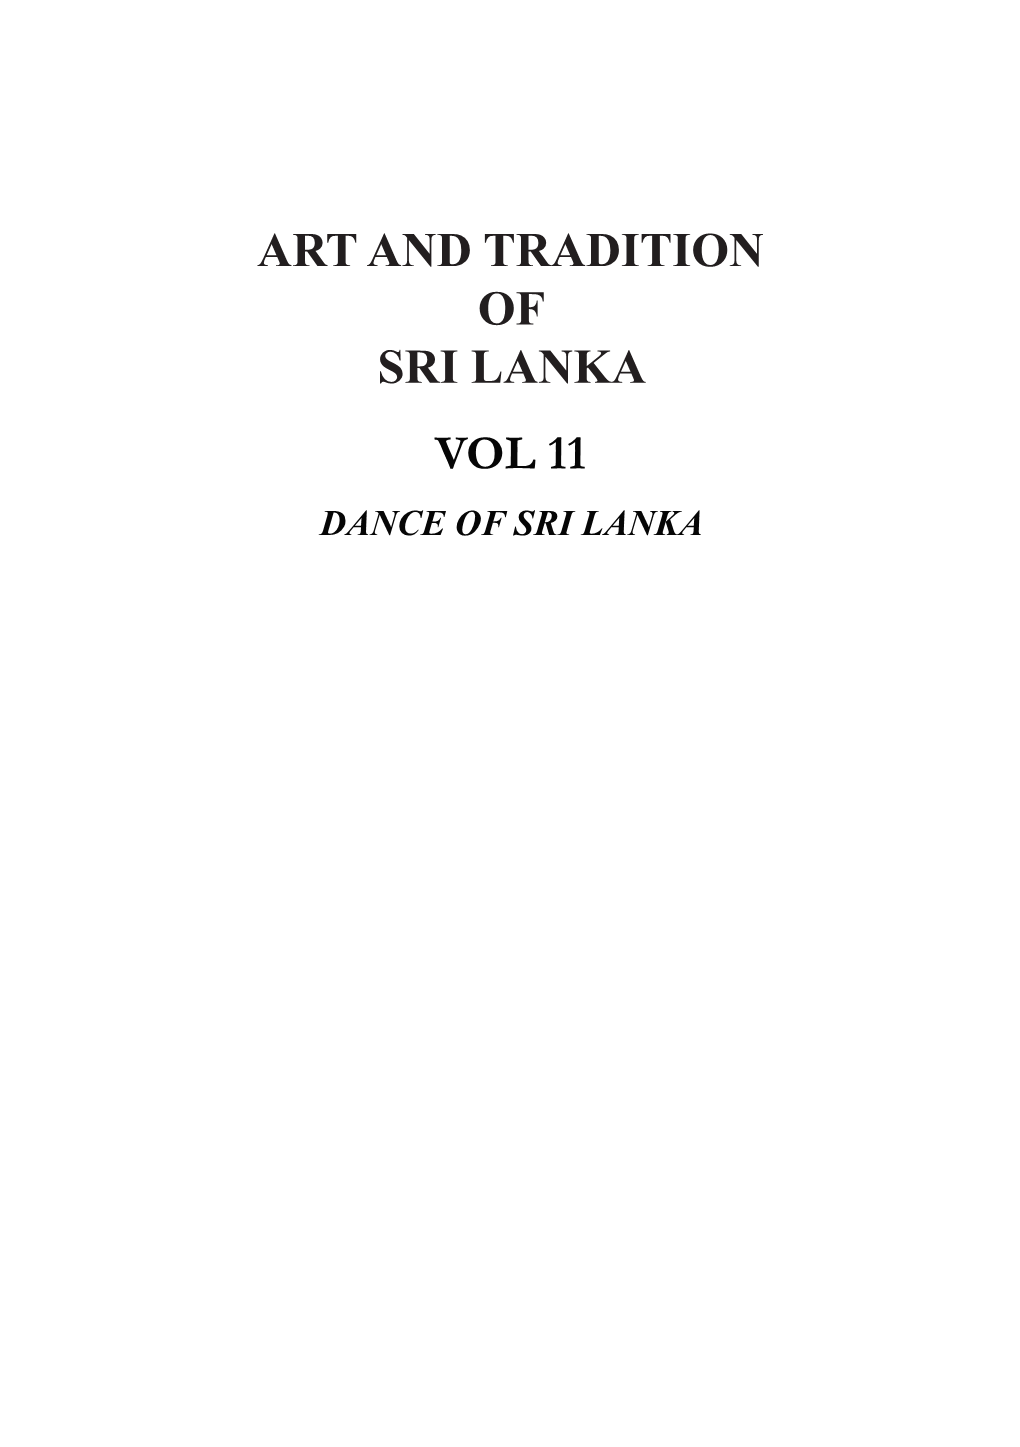 Art and Tradition of Sri Lanka Vol 11 Dance of Sri Lanka